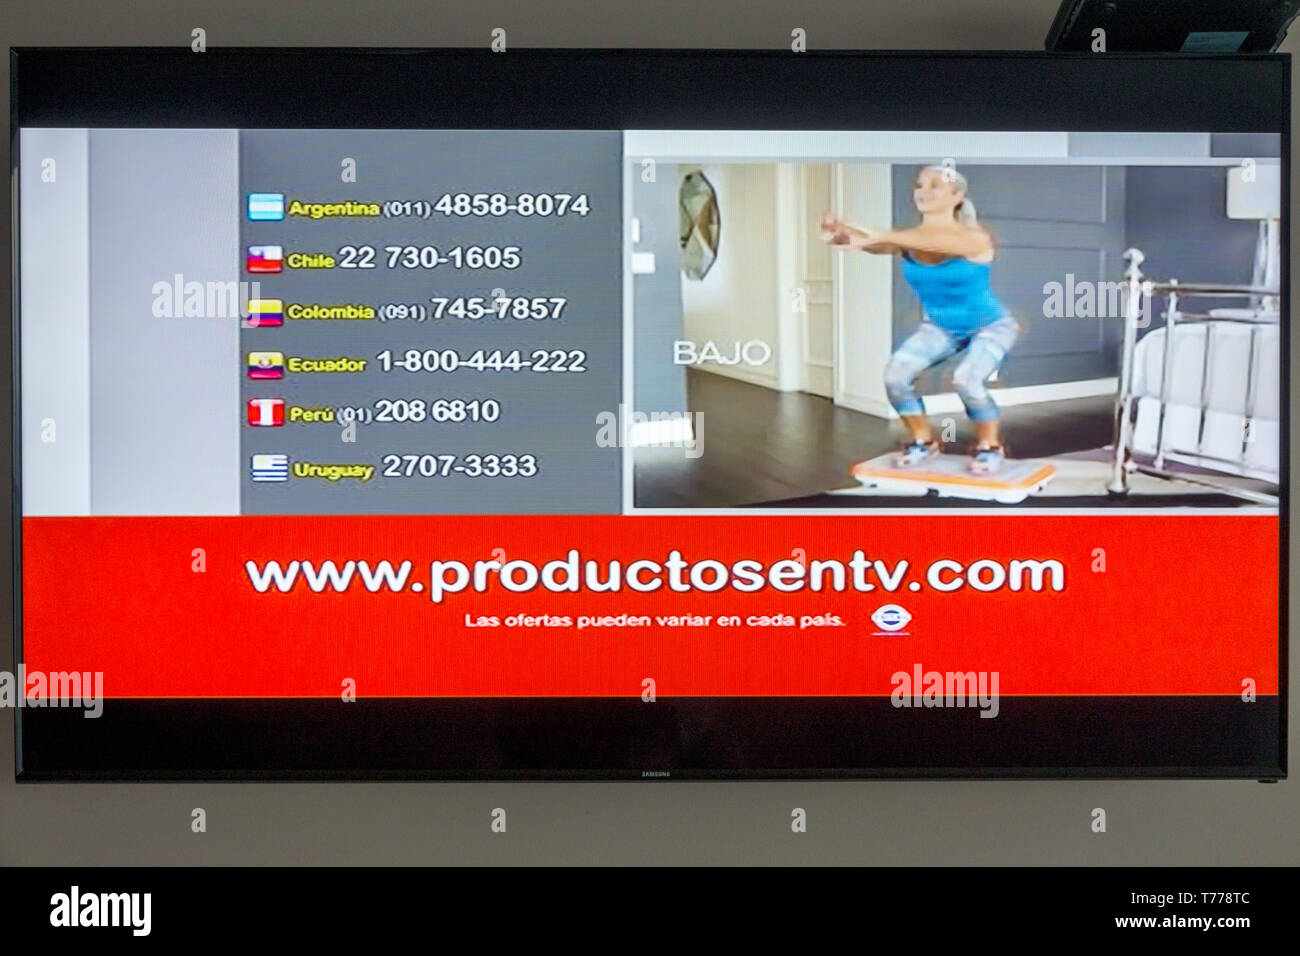 Cartagena Kolumbien, Fernsehbildschirm Flachbildschirm, www.productosentv.com,marketing,shopping Kanäle, Lateinamerika, Telemarketing, Besucher reisen Stockfoto